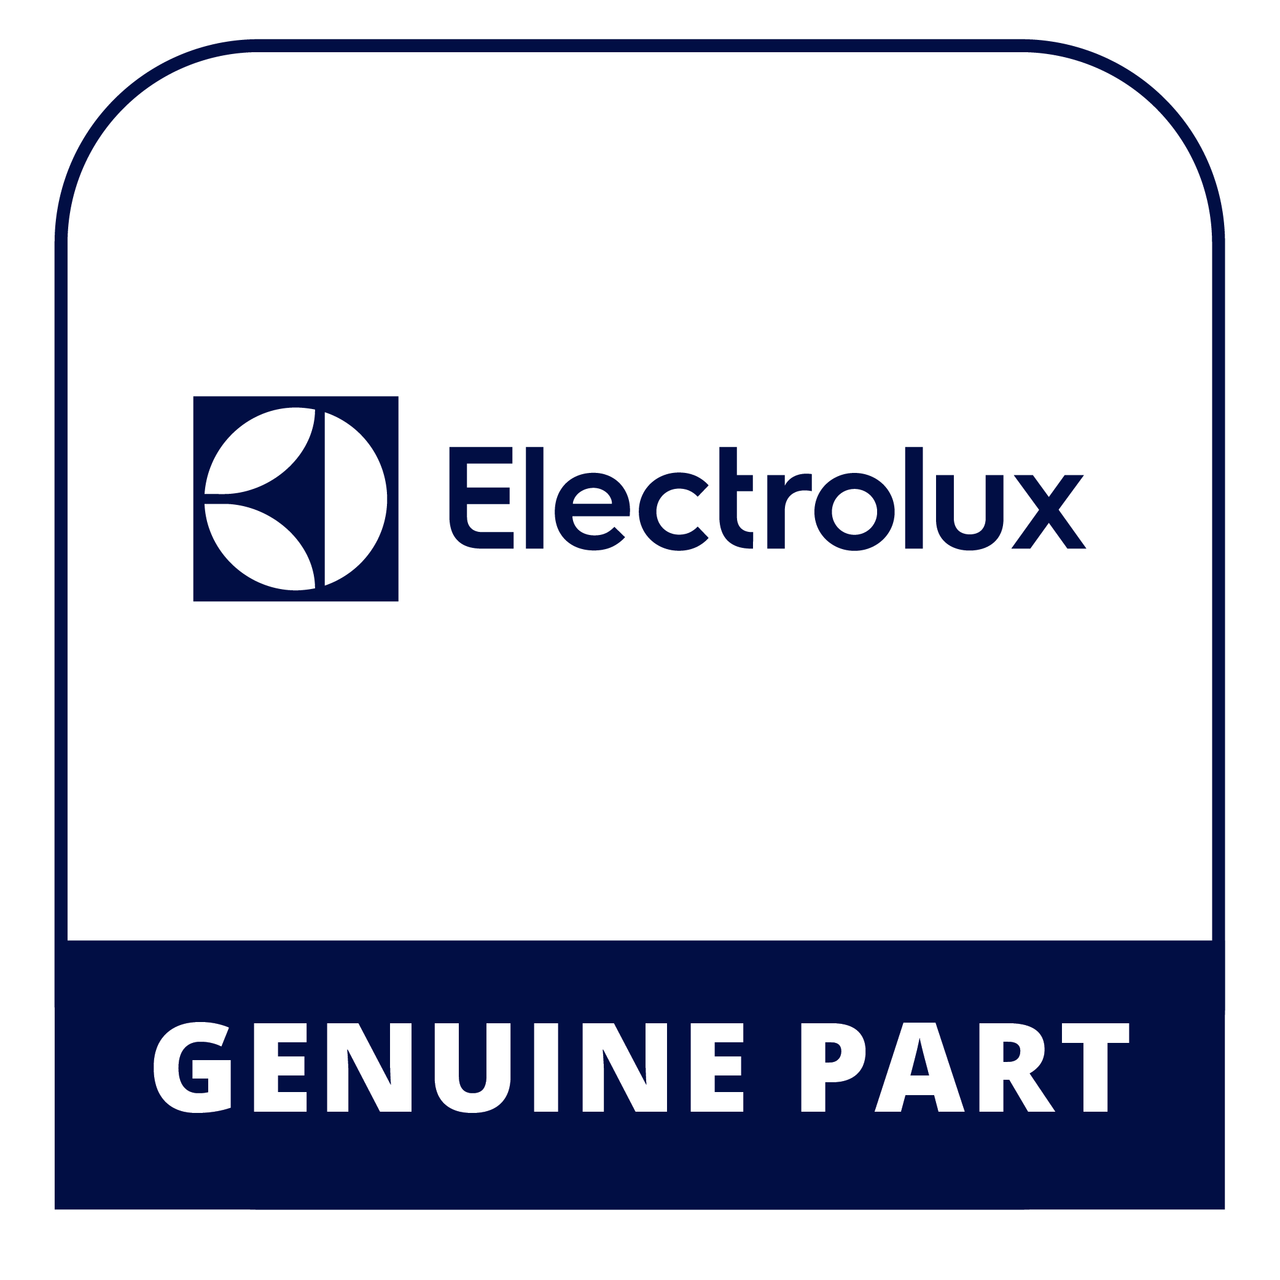 Frigidaire - Electrolux 316563300 Cover - Genuine Electrolux Part